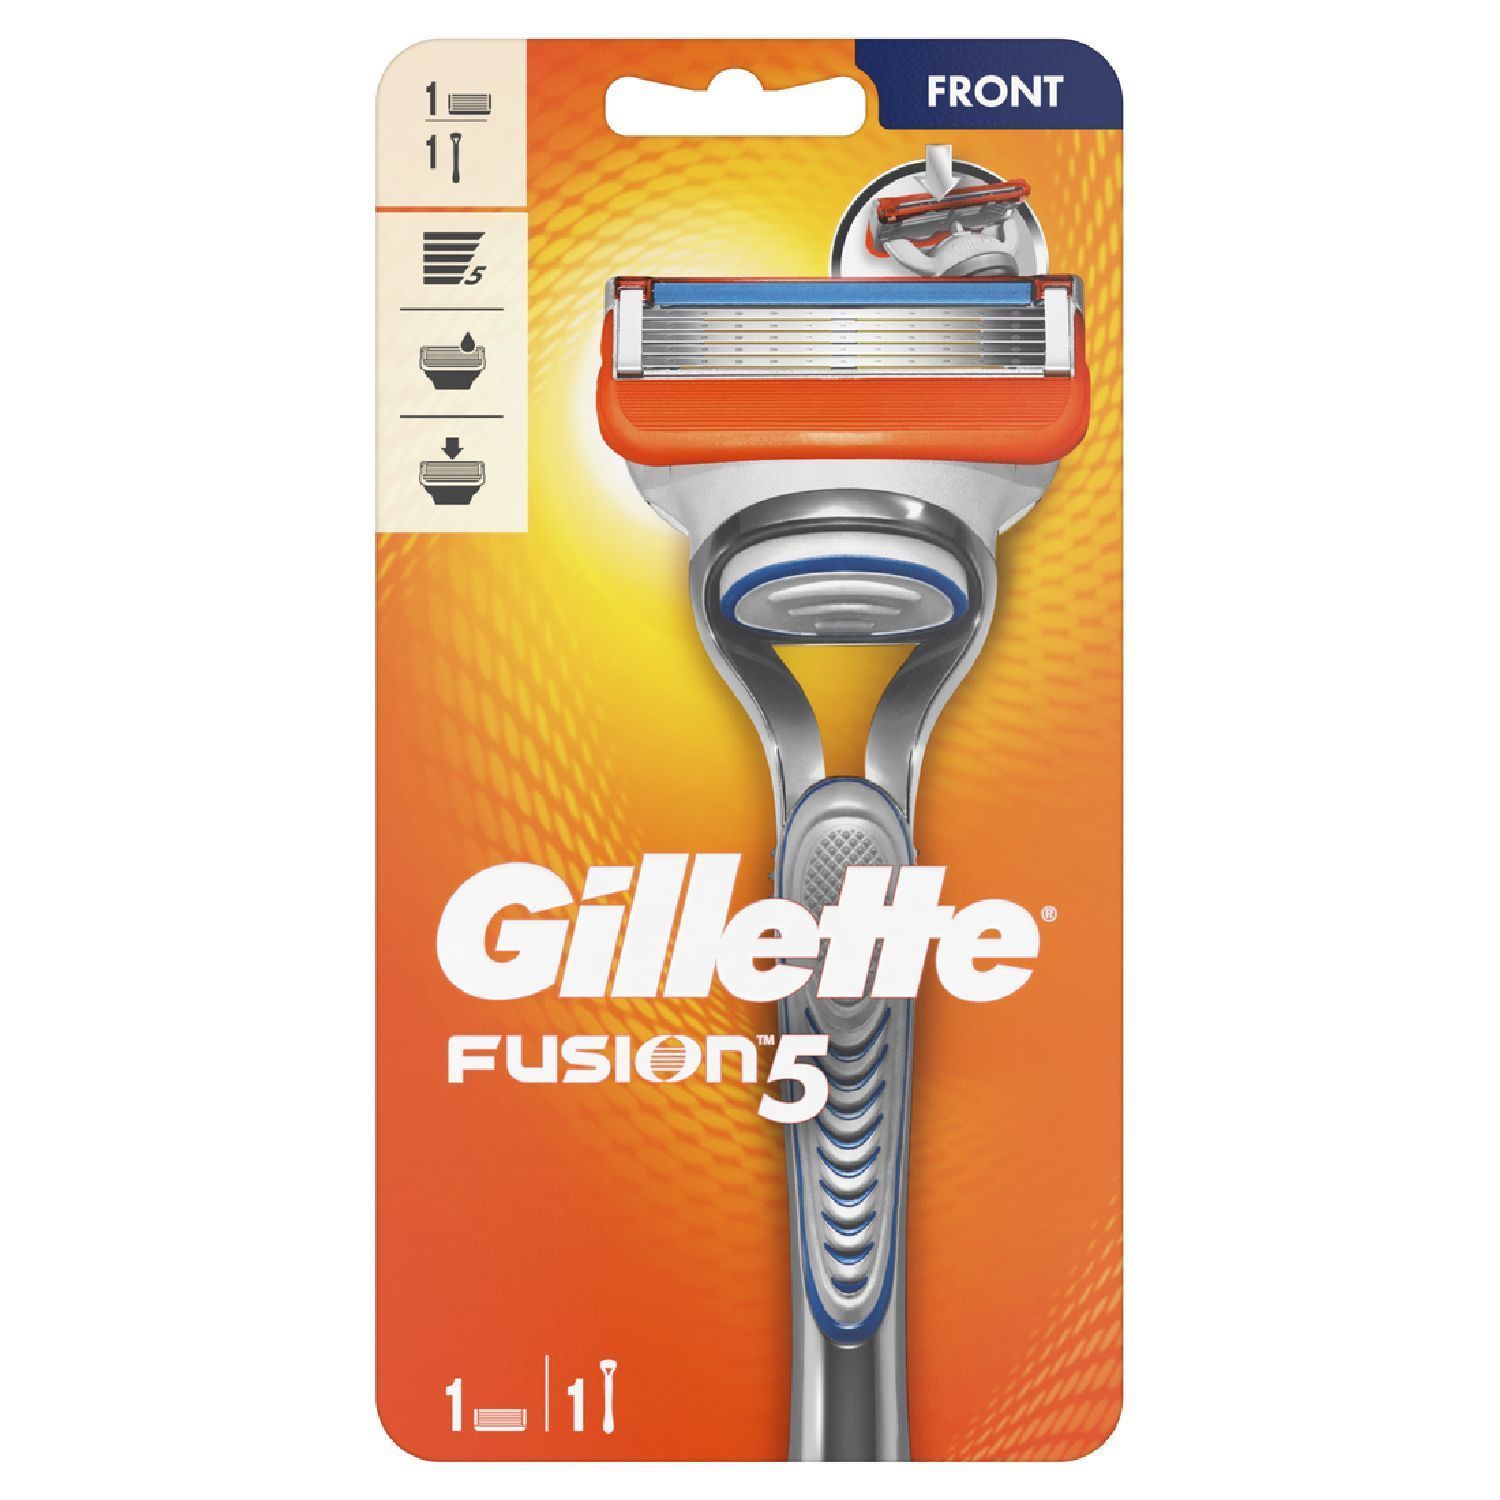 Gillette Venus + Fusion Manual Shaving & Haircare Rakhi Kit For Him And Her